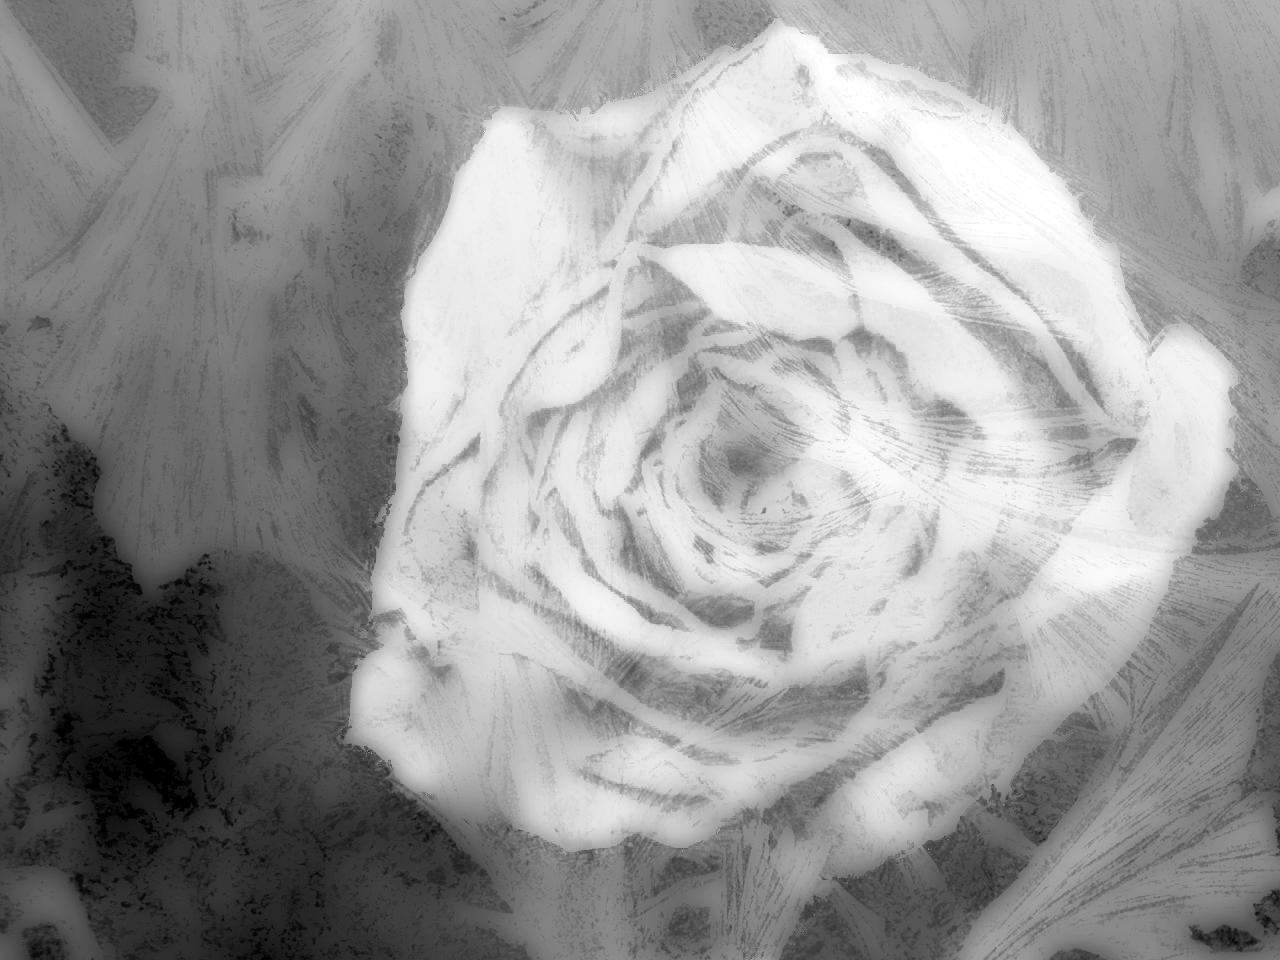     ice rose    by virgo e